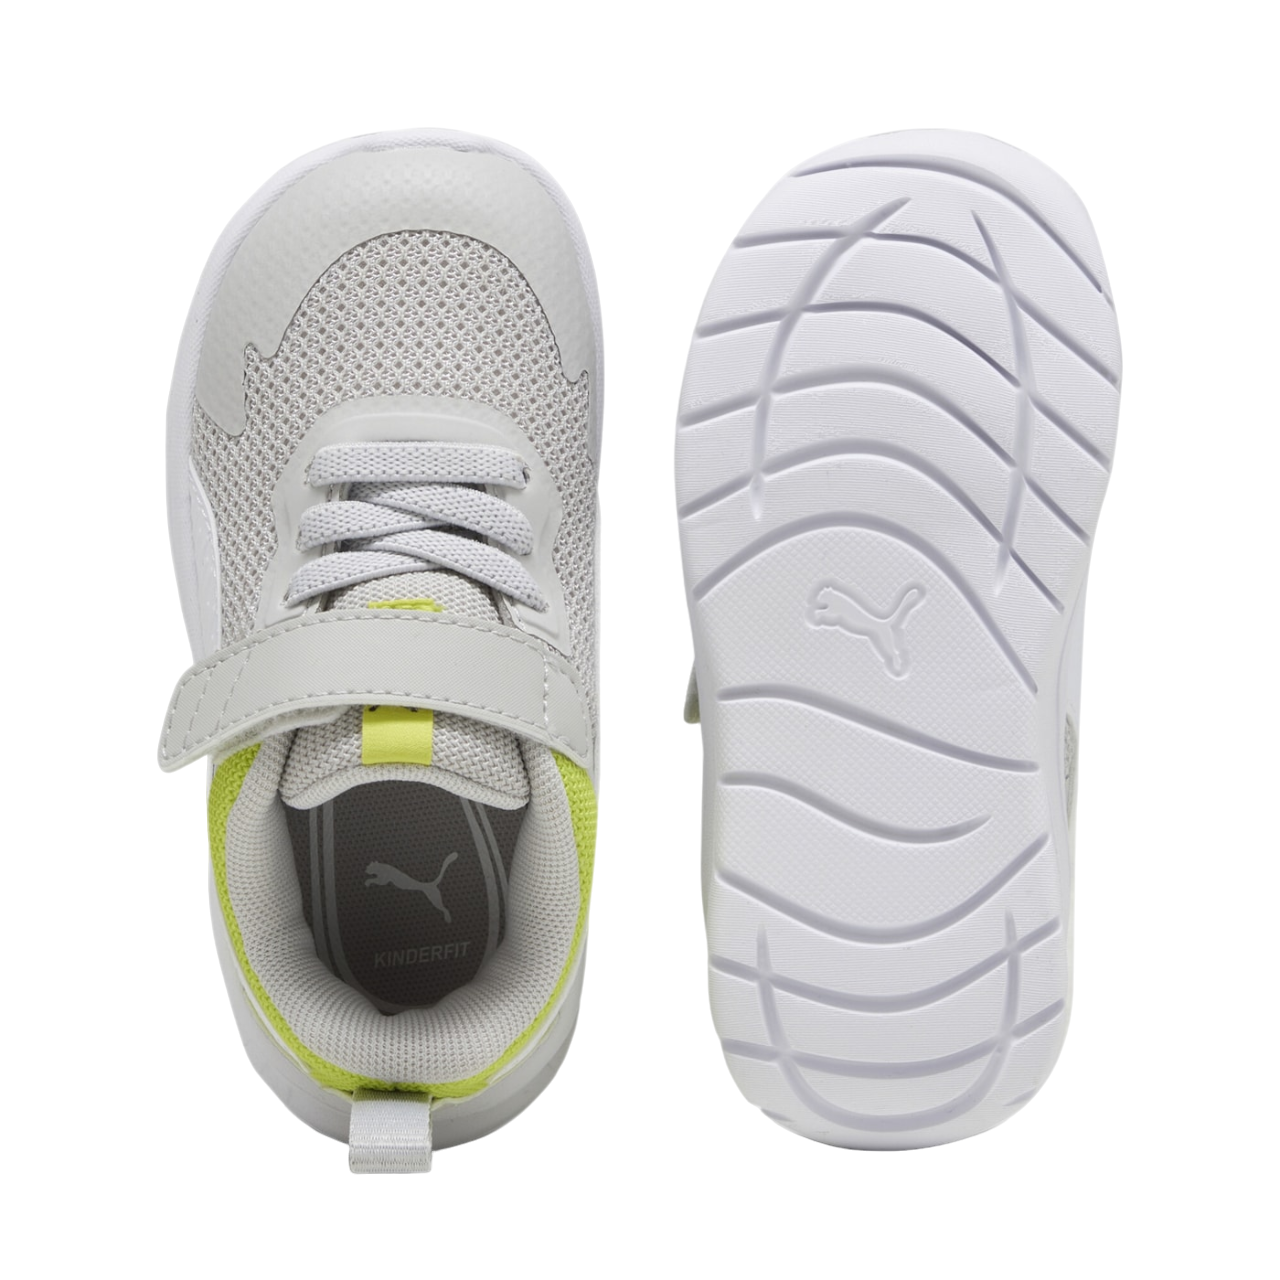 Puma scarpa sneakers da bambino Elolve Run Mesch 386240-10 grigio-bianco